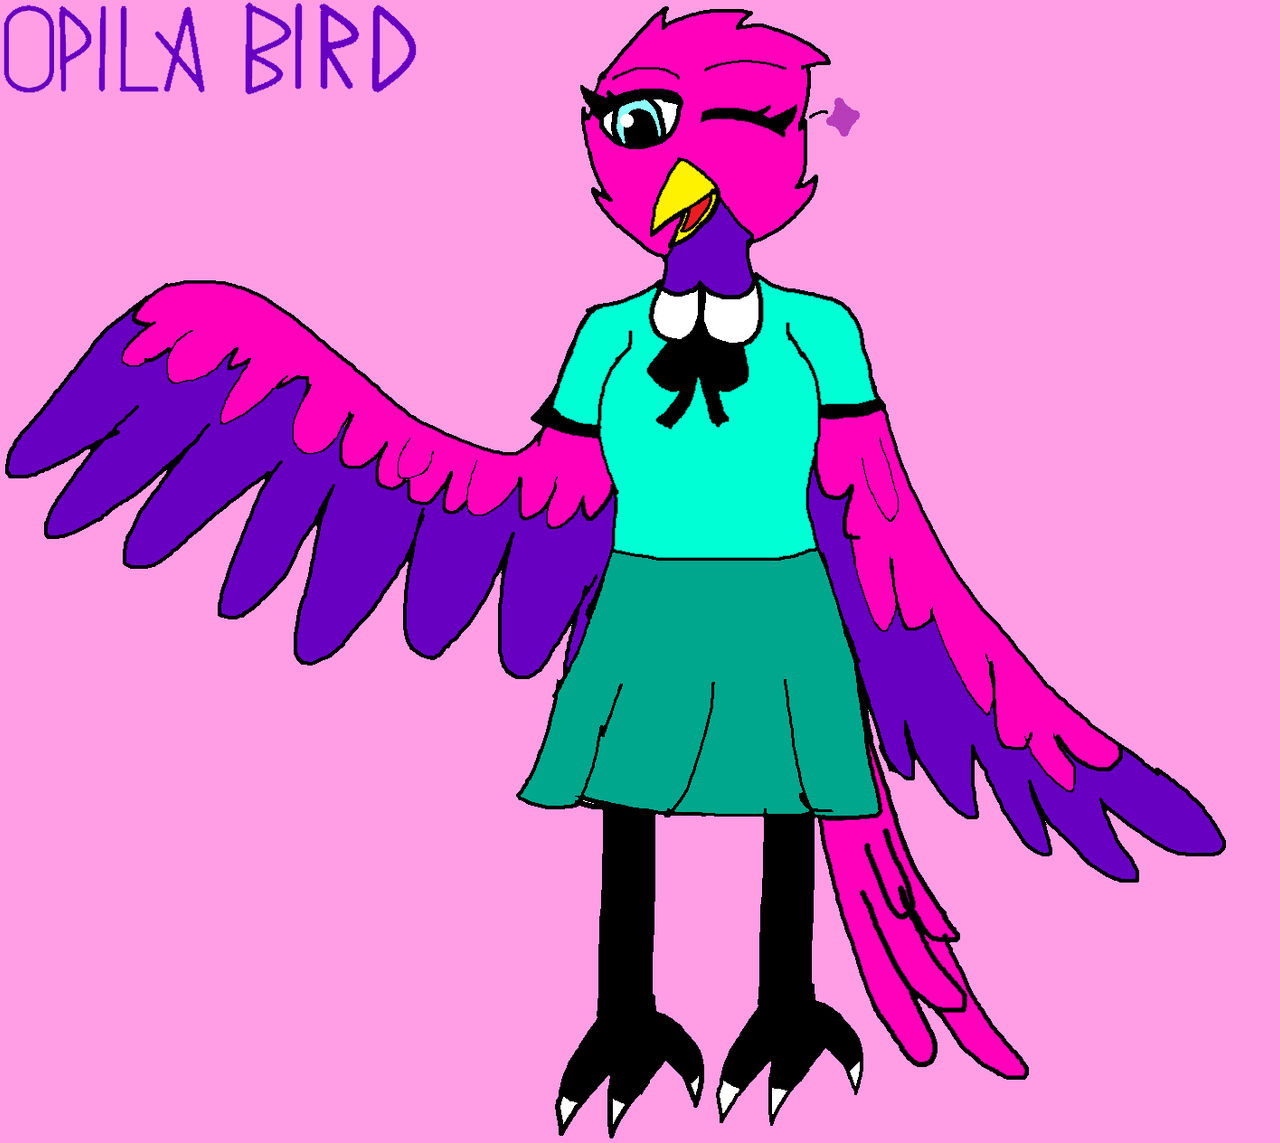 Opila Bird by jazminfoxybonnie on DeviantArt